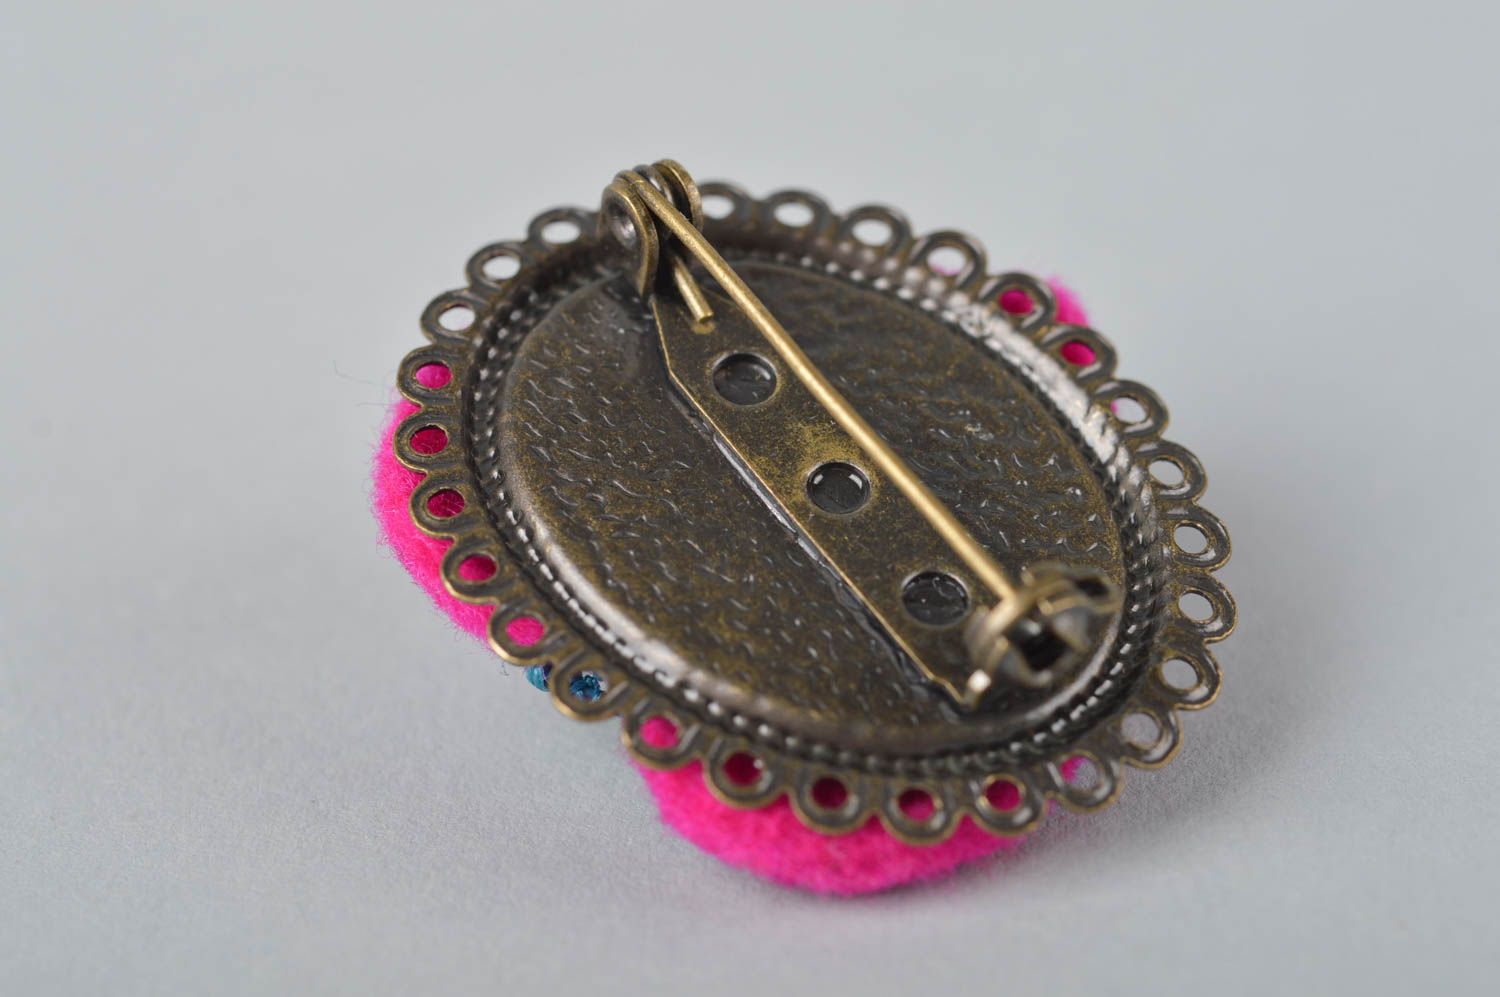 Beautiful handmade felt brooch artisan jewelry designs accessories for girls photo 2